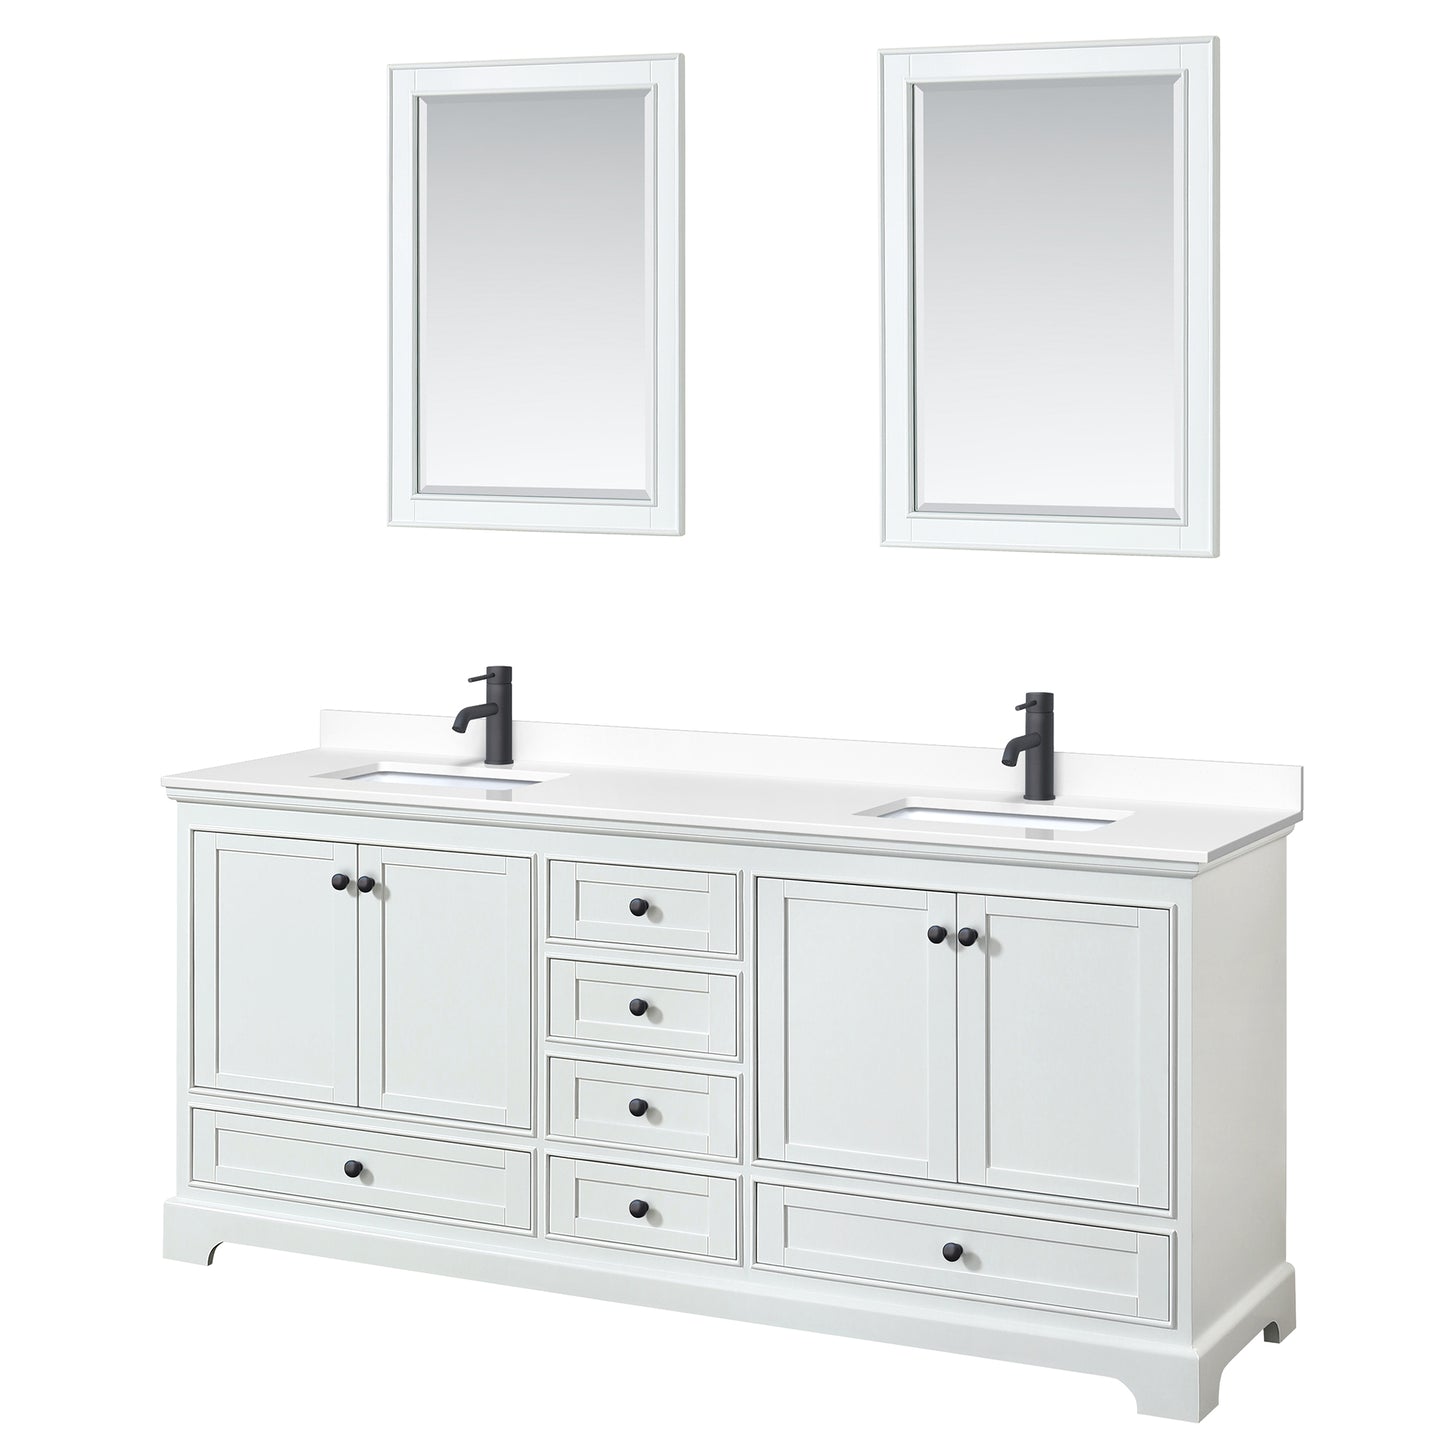 Wyndham Deborah 80 Inch Double Bathroom Vanity White Cultured Marble Countertop, Undermount Square Sinks in Matte Black Trim with 24 Inch Mirrors - Luxe Bathroom Vanities